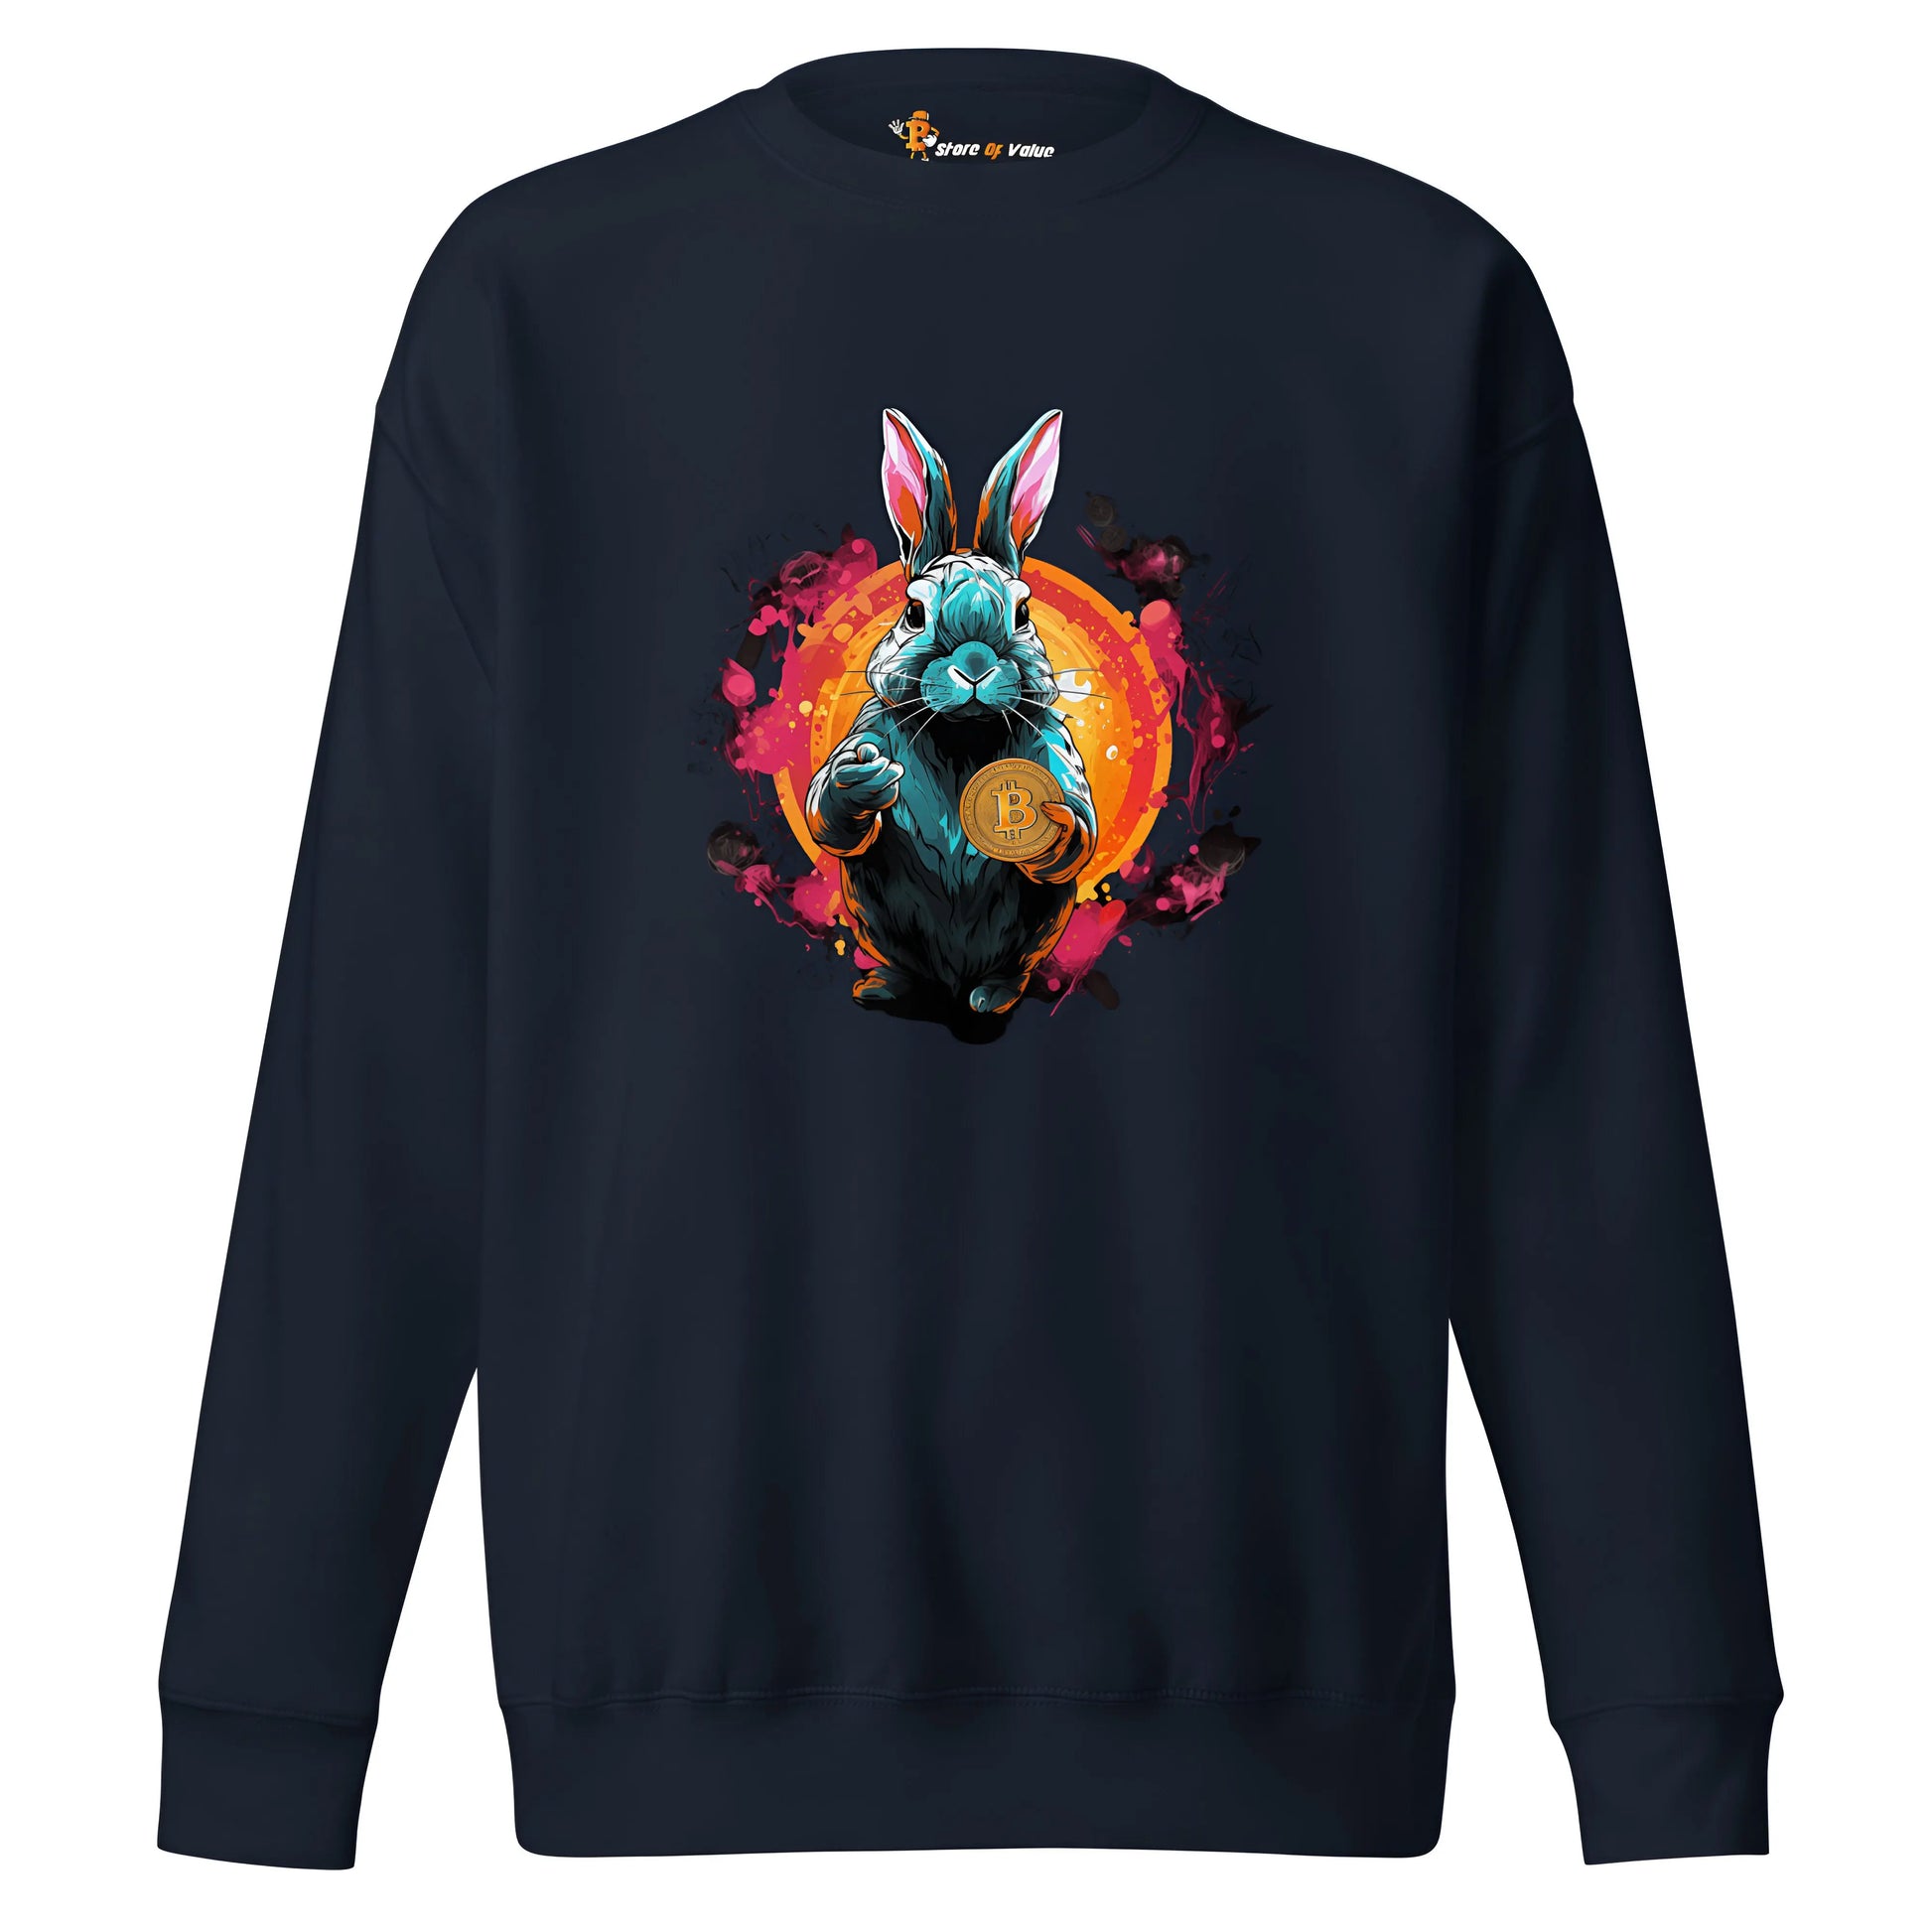 Falling Down The Bitcoin Rabbit Hole - Premium Unisex Bitcoin Sweatshirt - Join us Too! Navy Color